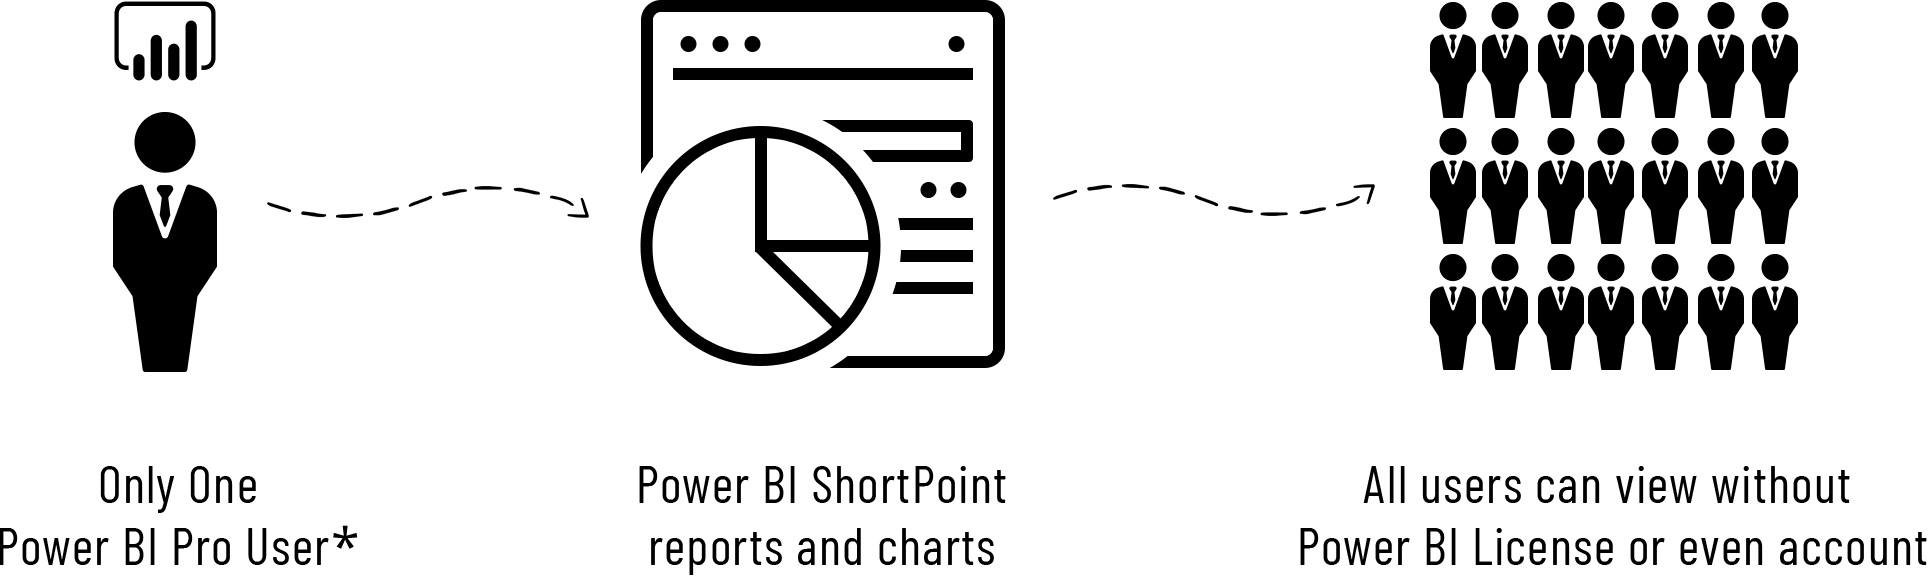 PowerBI Account Integration Illustration